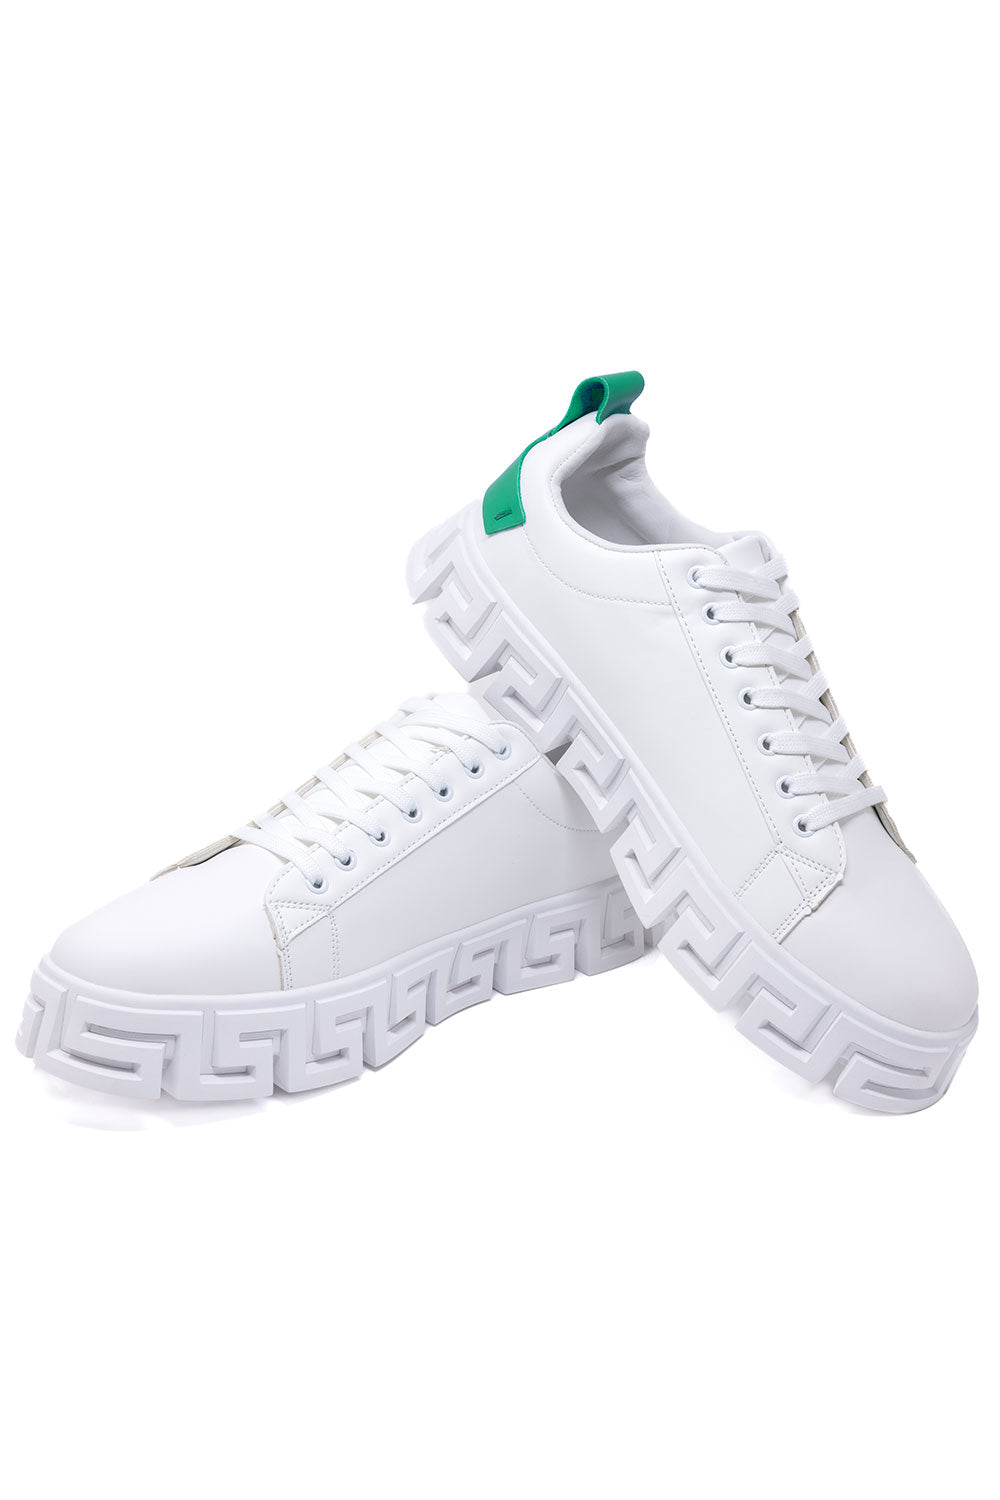 Barabas Men's Greek Key Sole Pattern Premium Sneakers 4SK06 White green